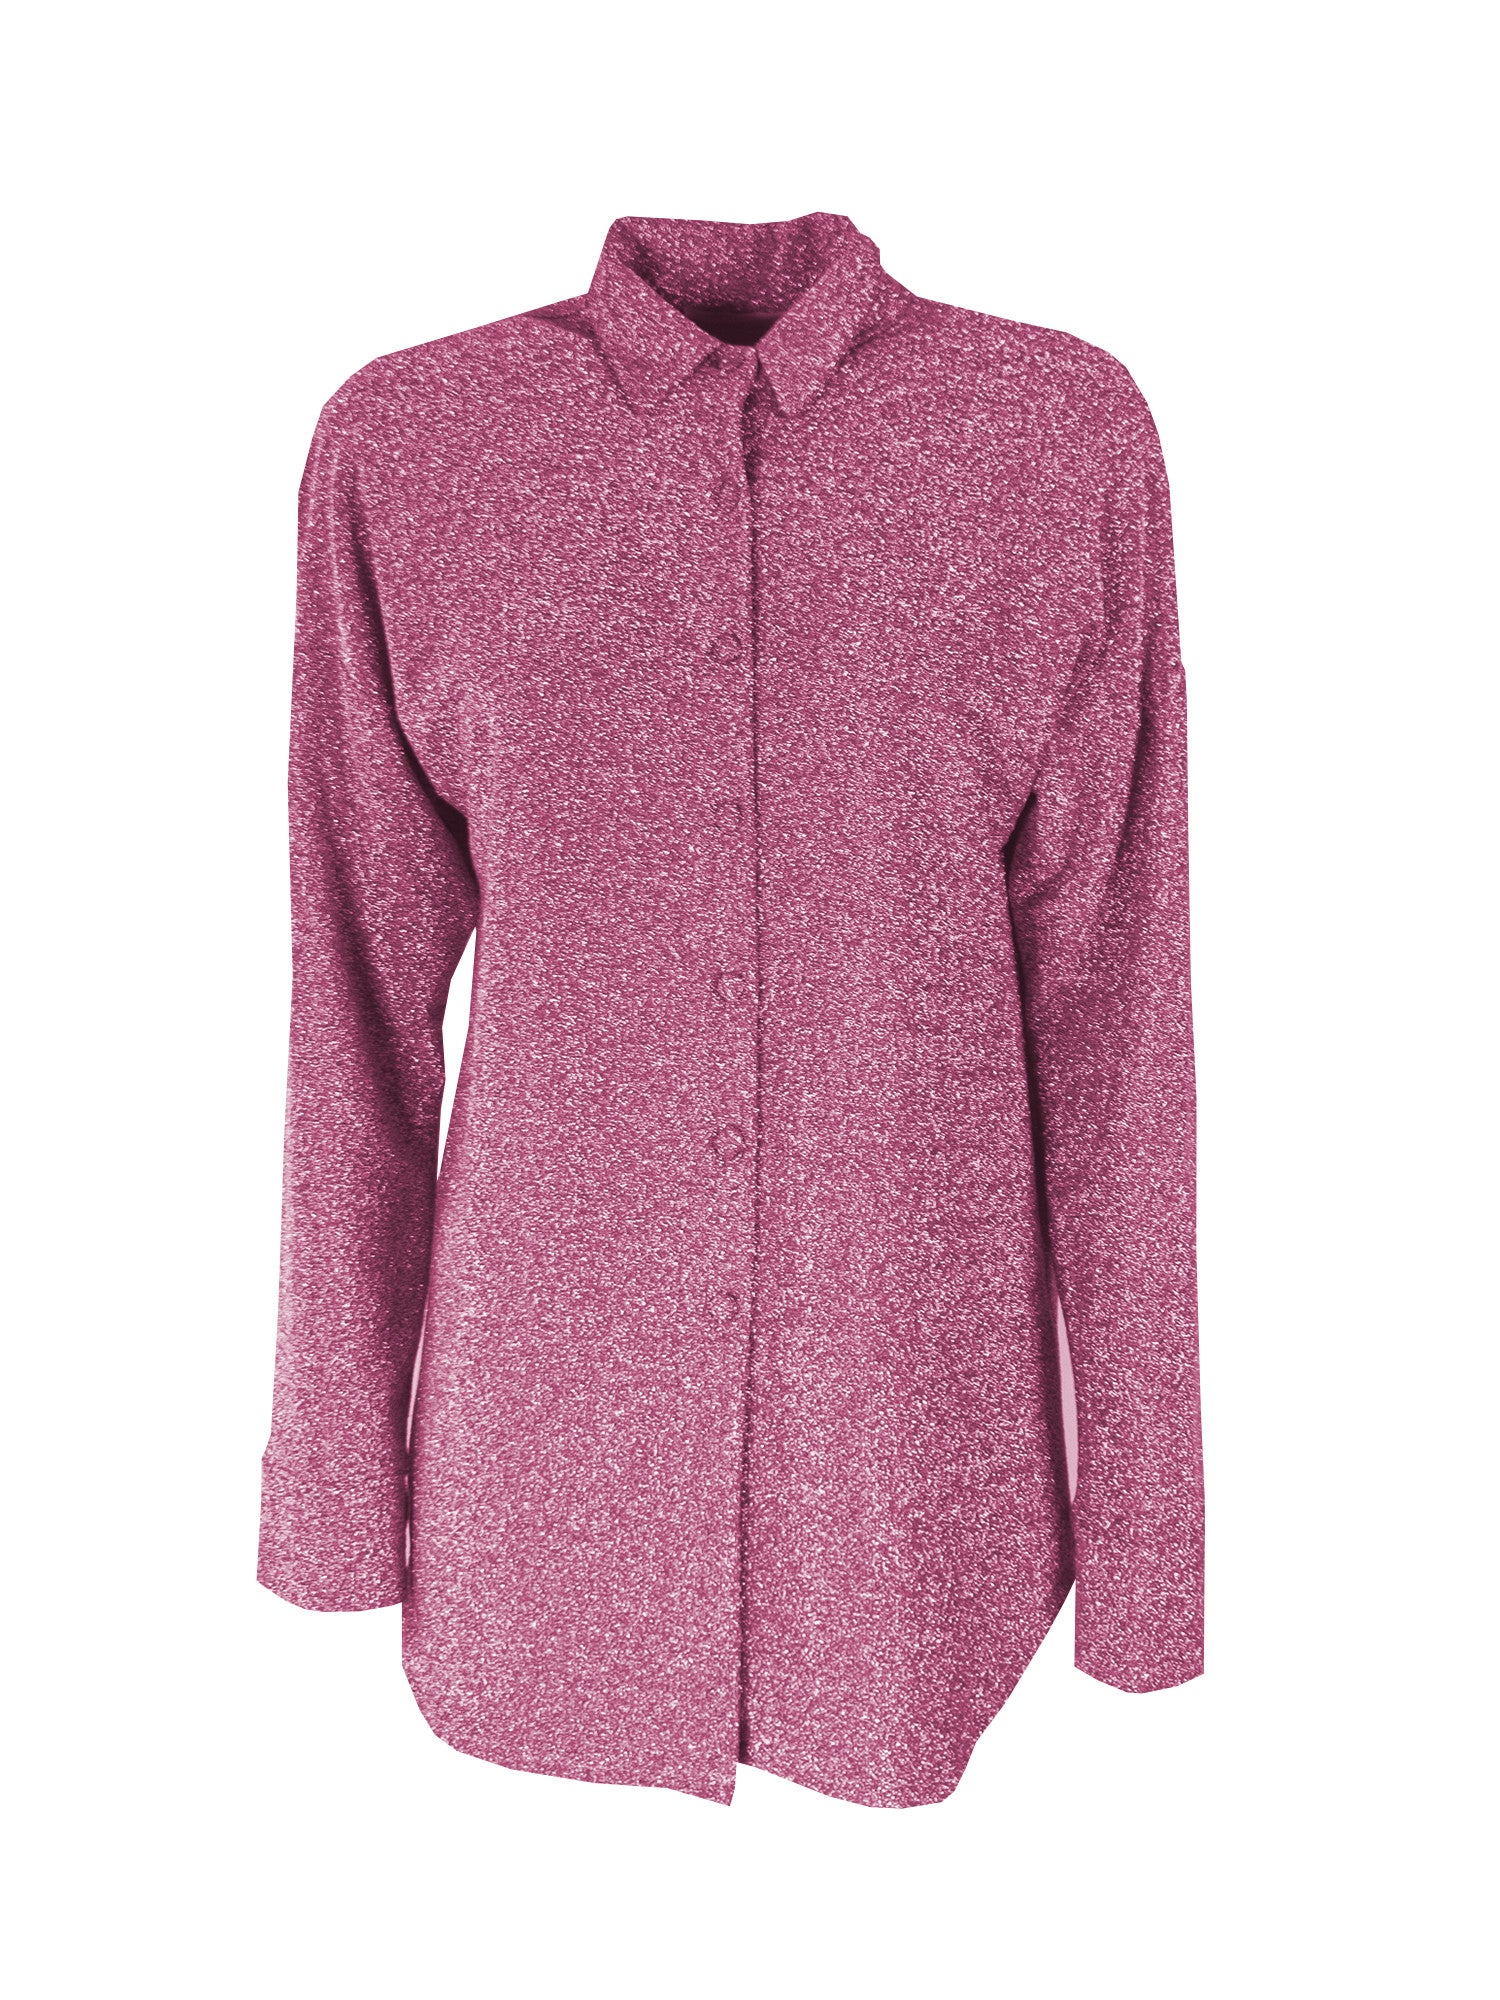 CELESTE - pink lurex shirt